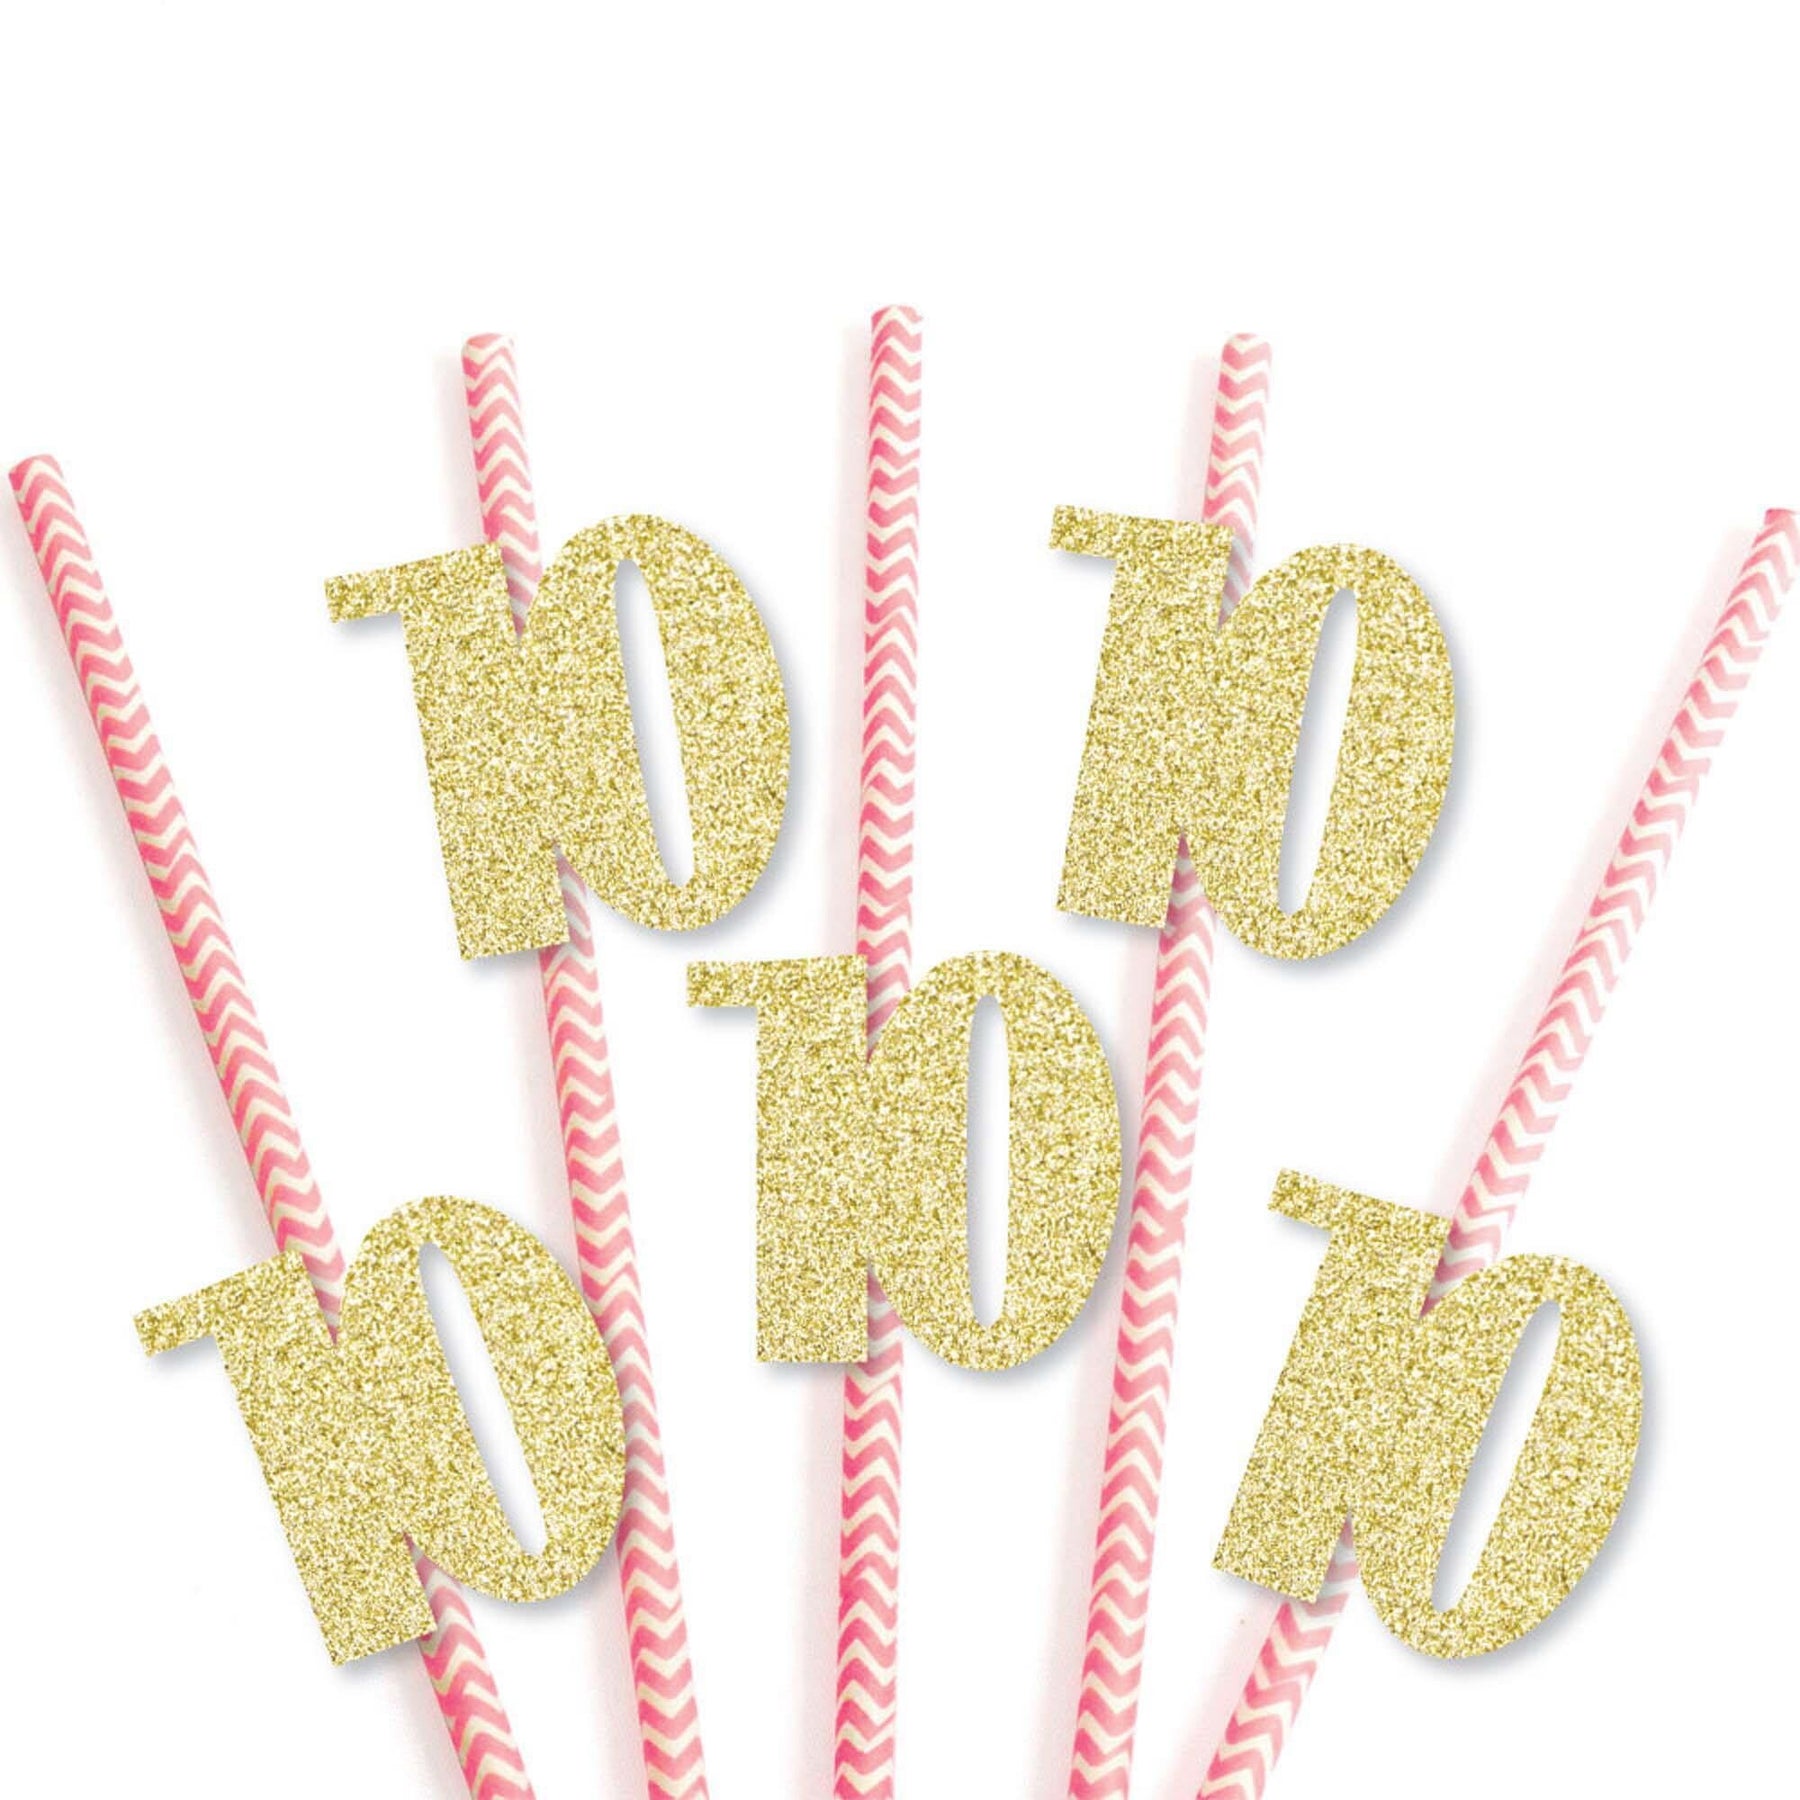 Gold Glitter Plastic Straws, 10 Count